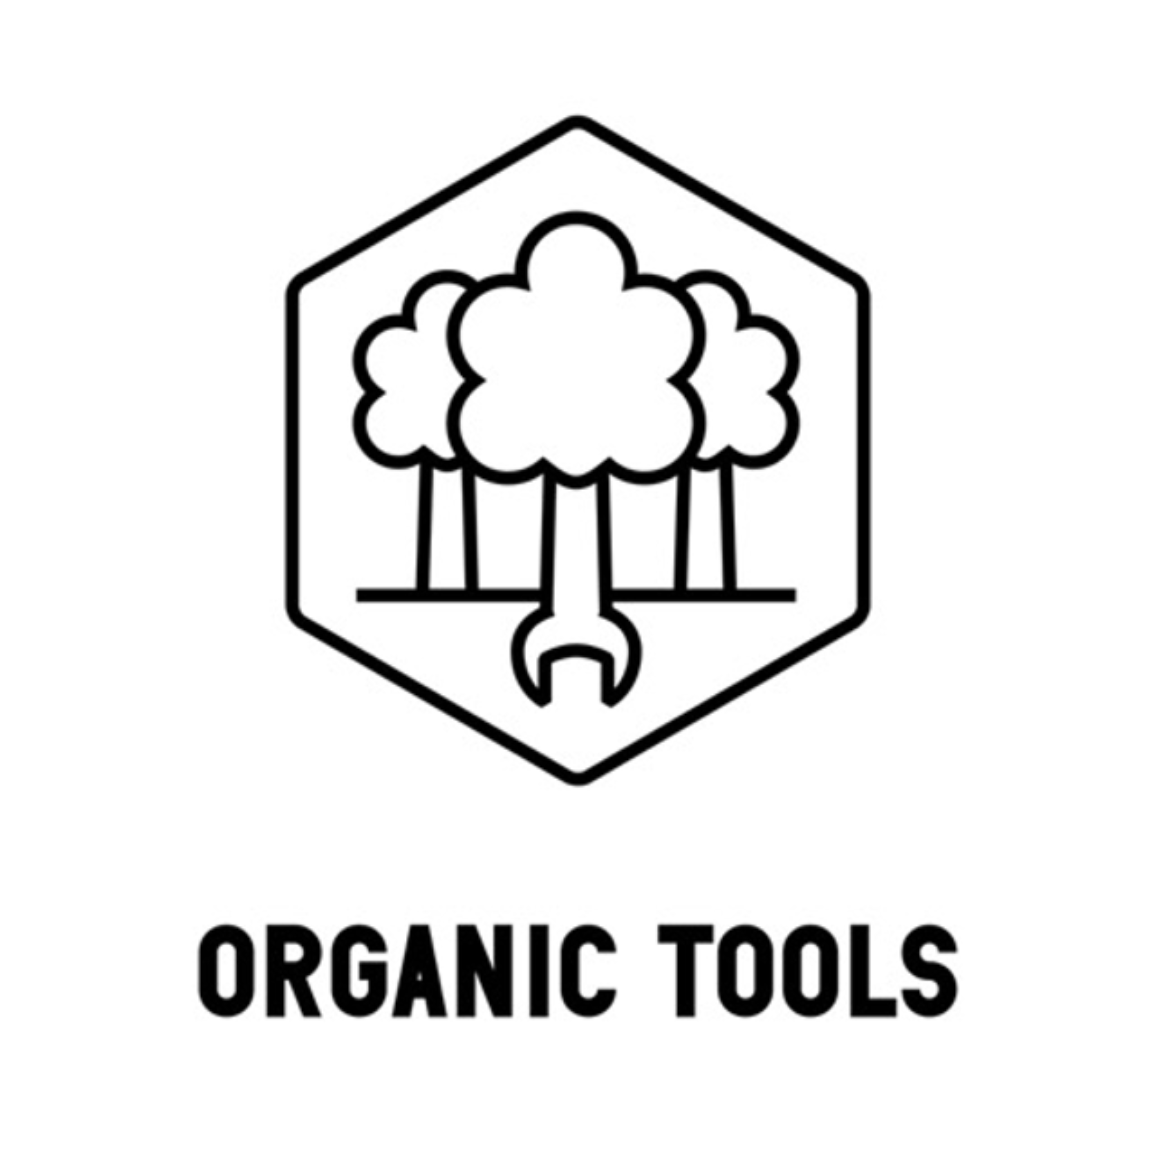 Organic Tools GmbH